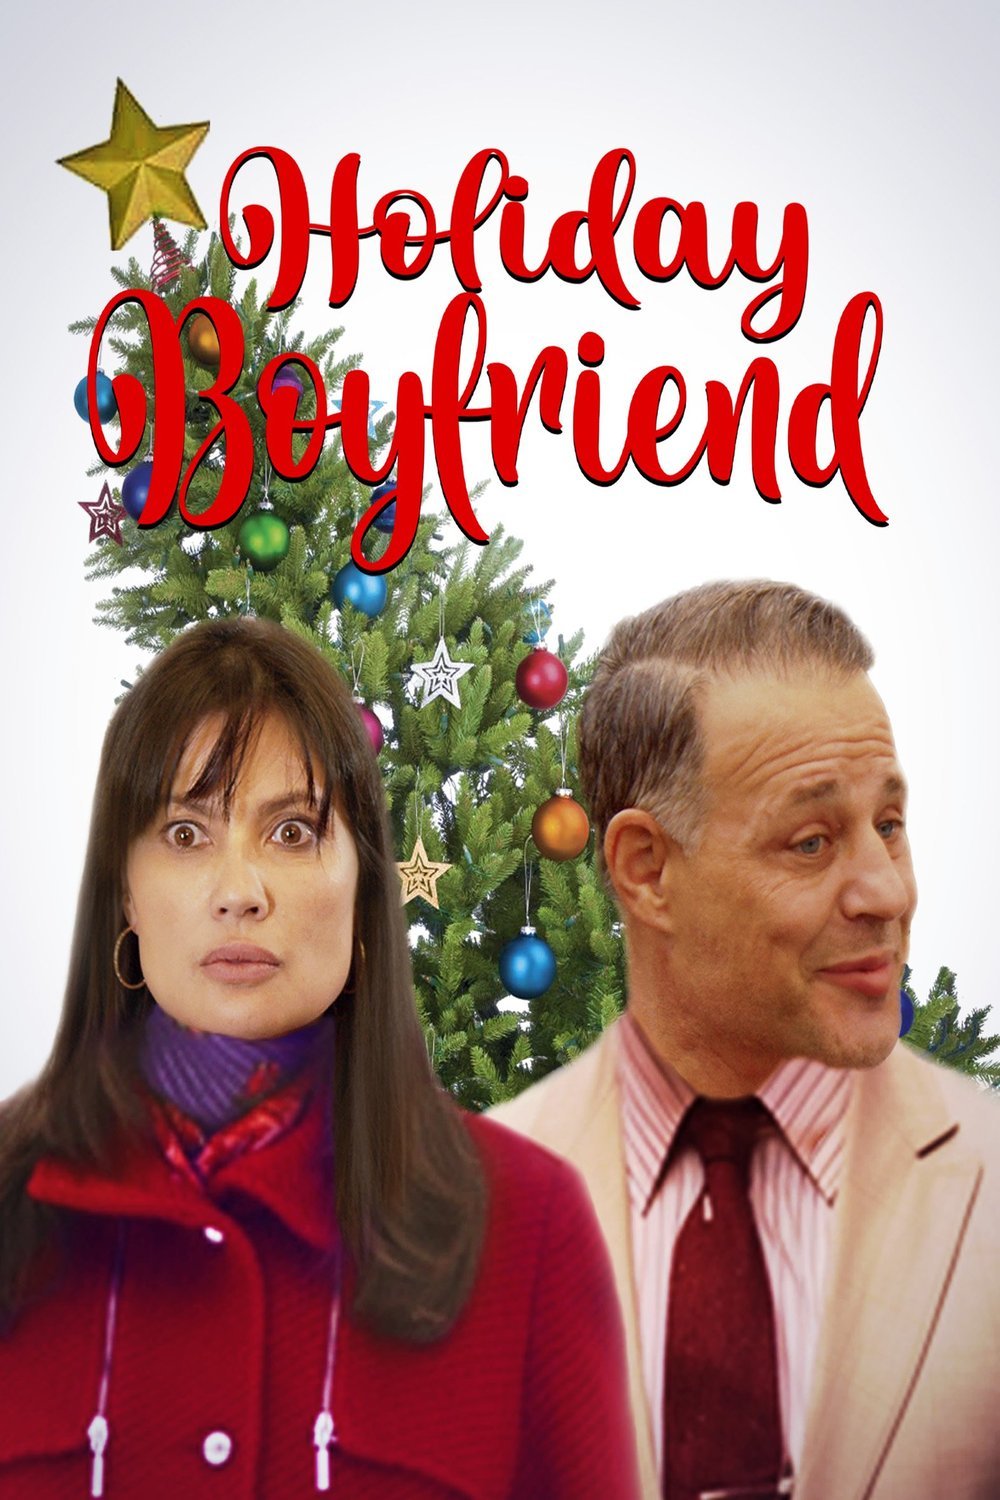 L'affiche originale du film Holiday Boyfriend en espagnol